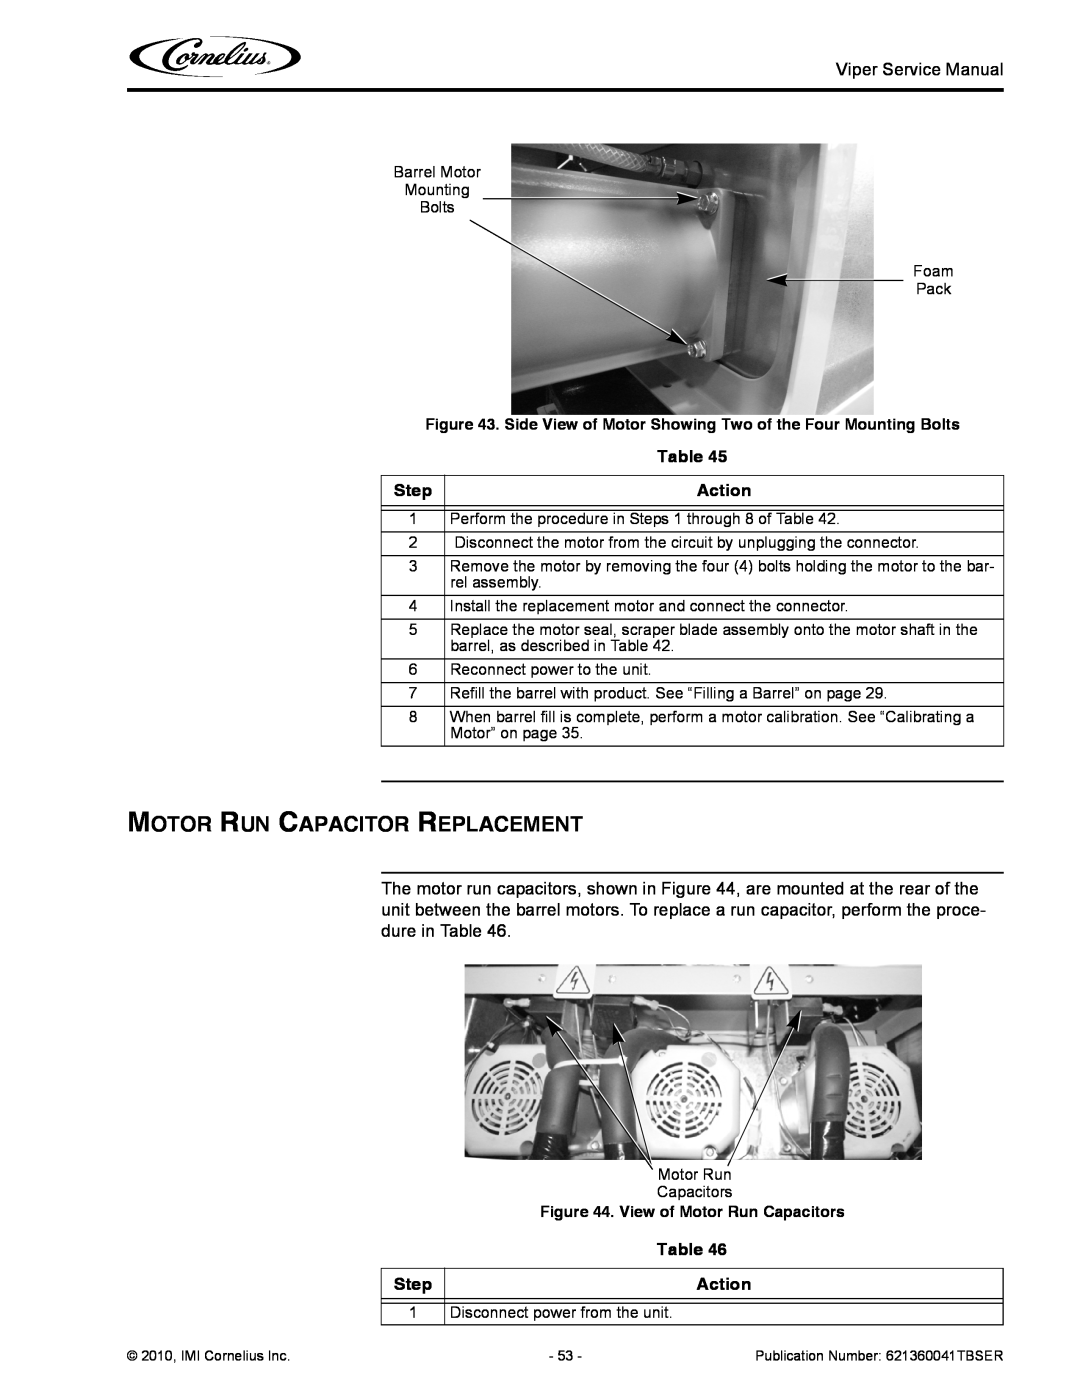 Cornelius 3 service manual Motor Run Capacitor Replacement, Action, Step, View of Motor Run Capacitors 